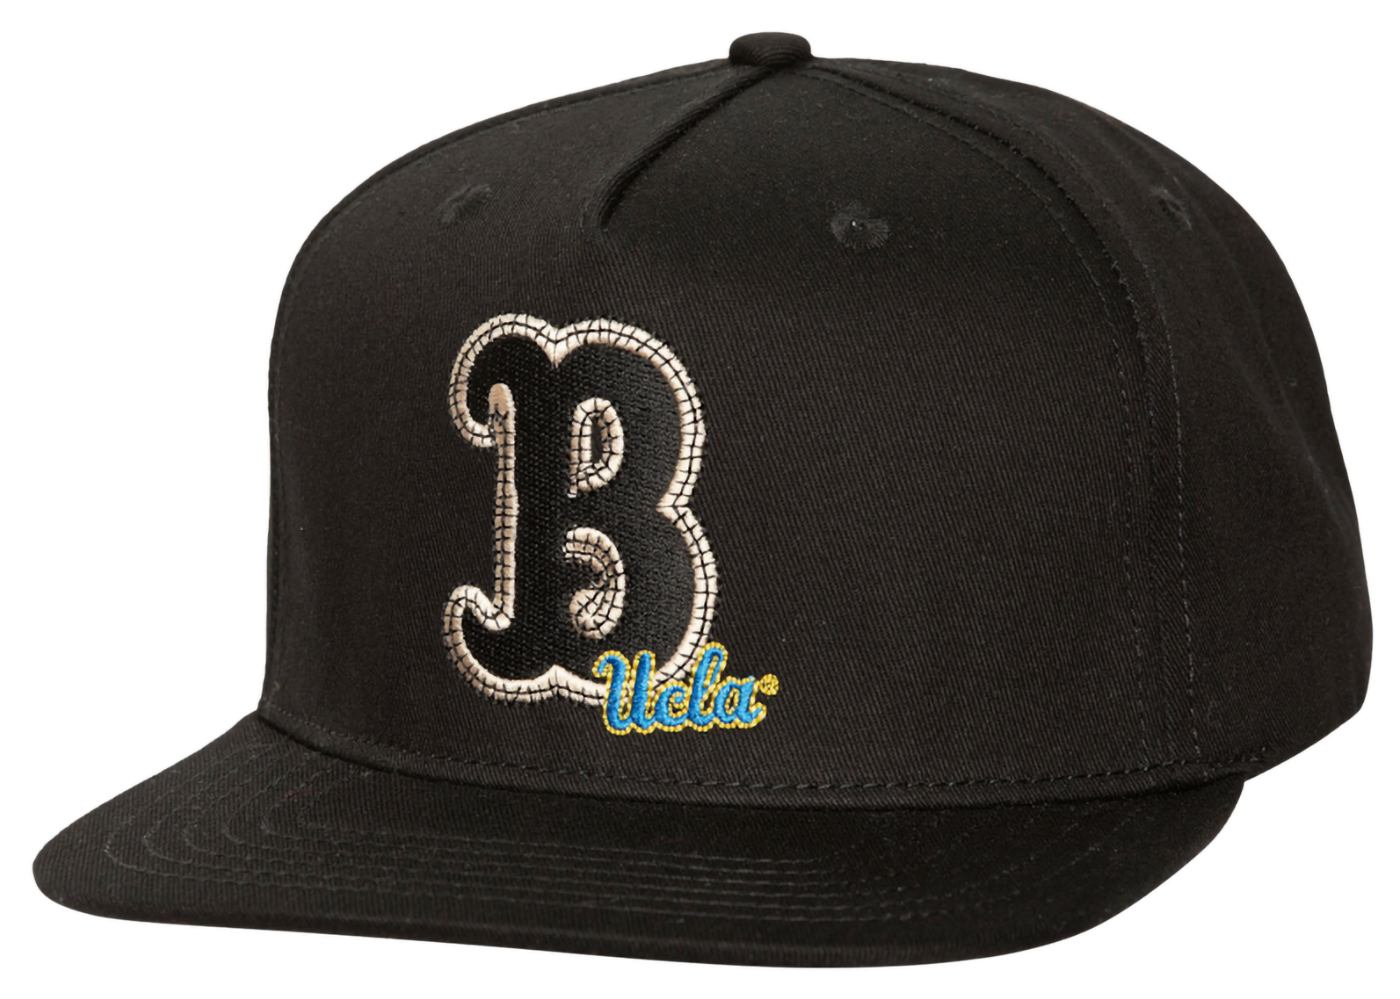 Travis Scott x Mitchell & Ness UCLA Bruins Snapback Hat Black